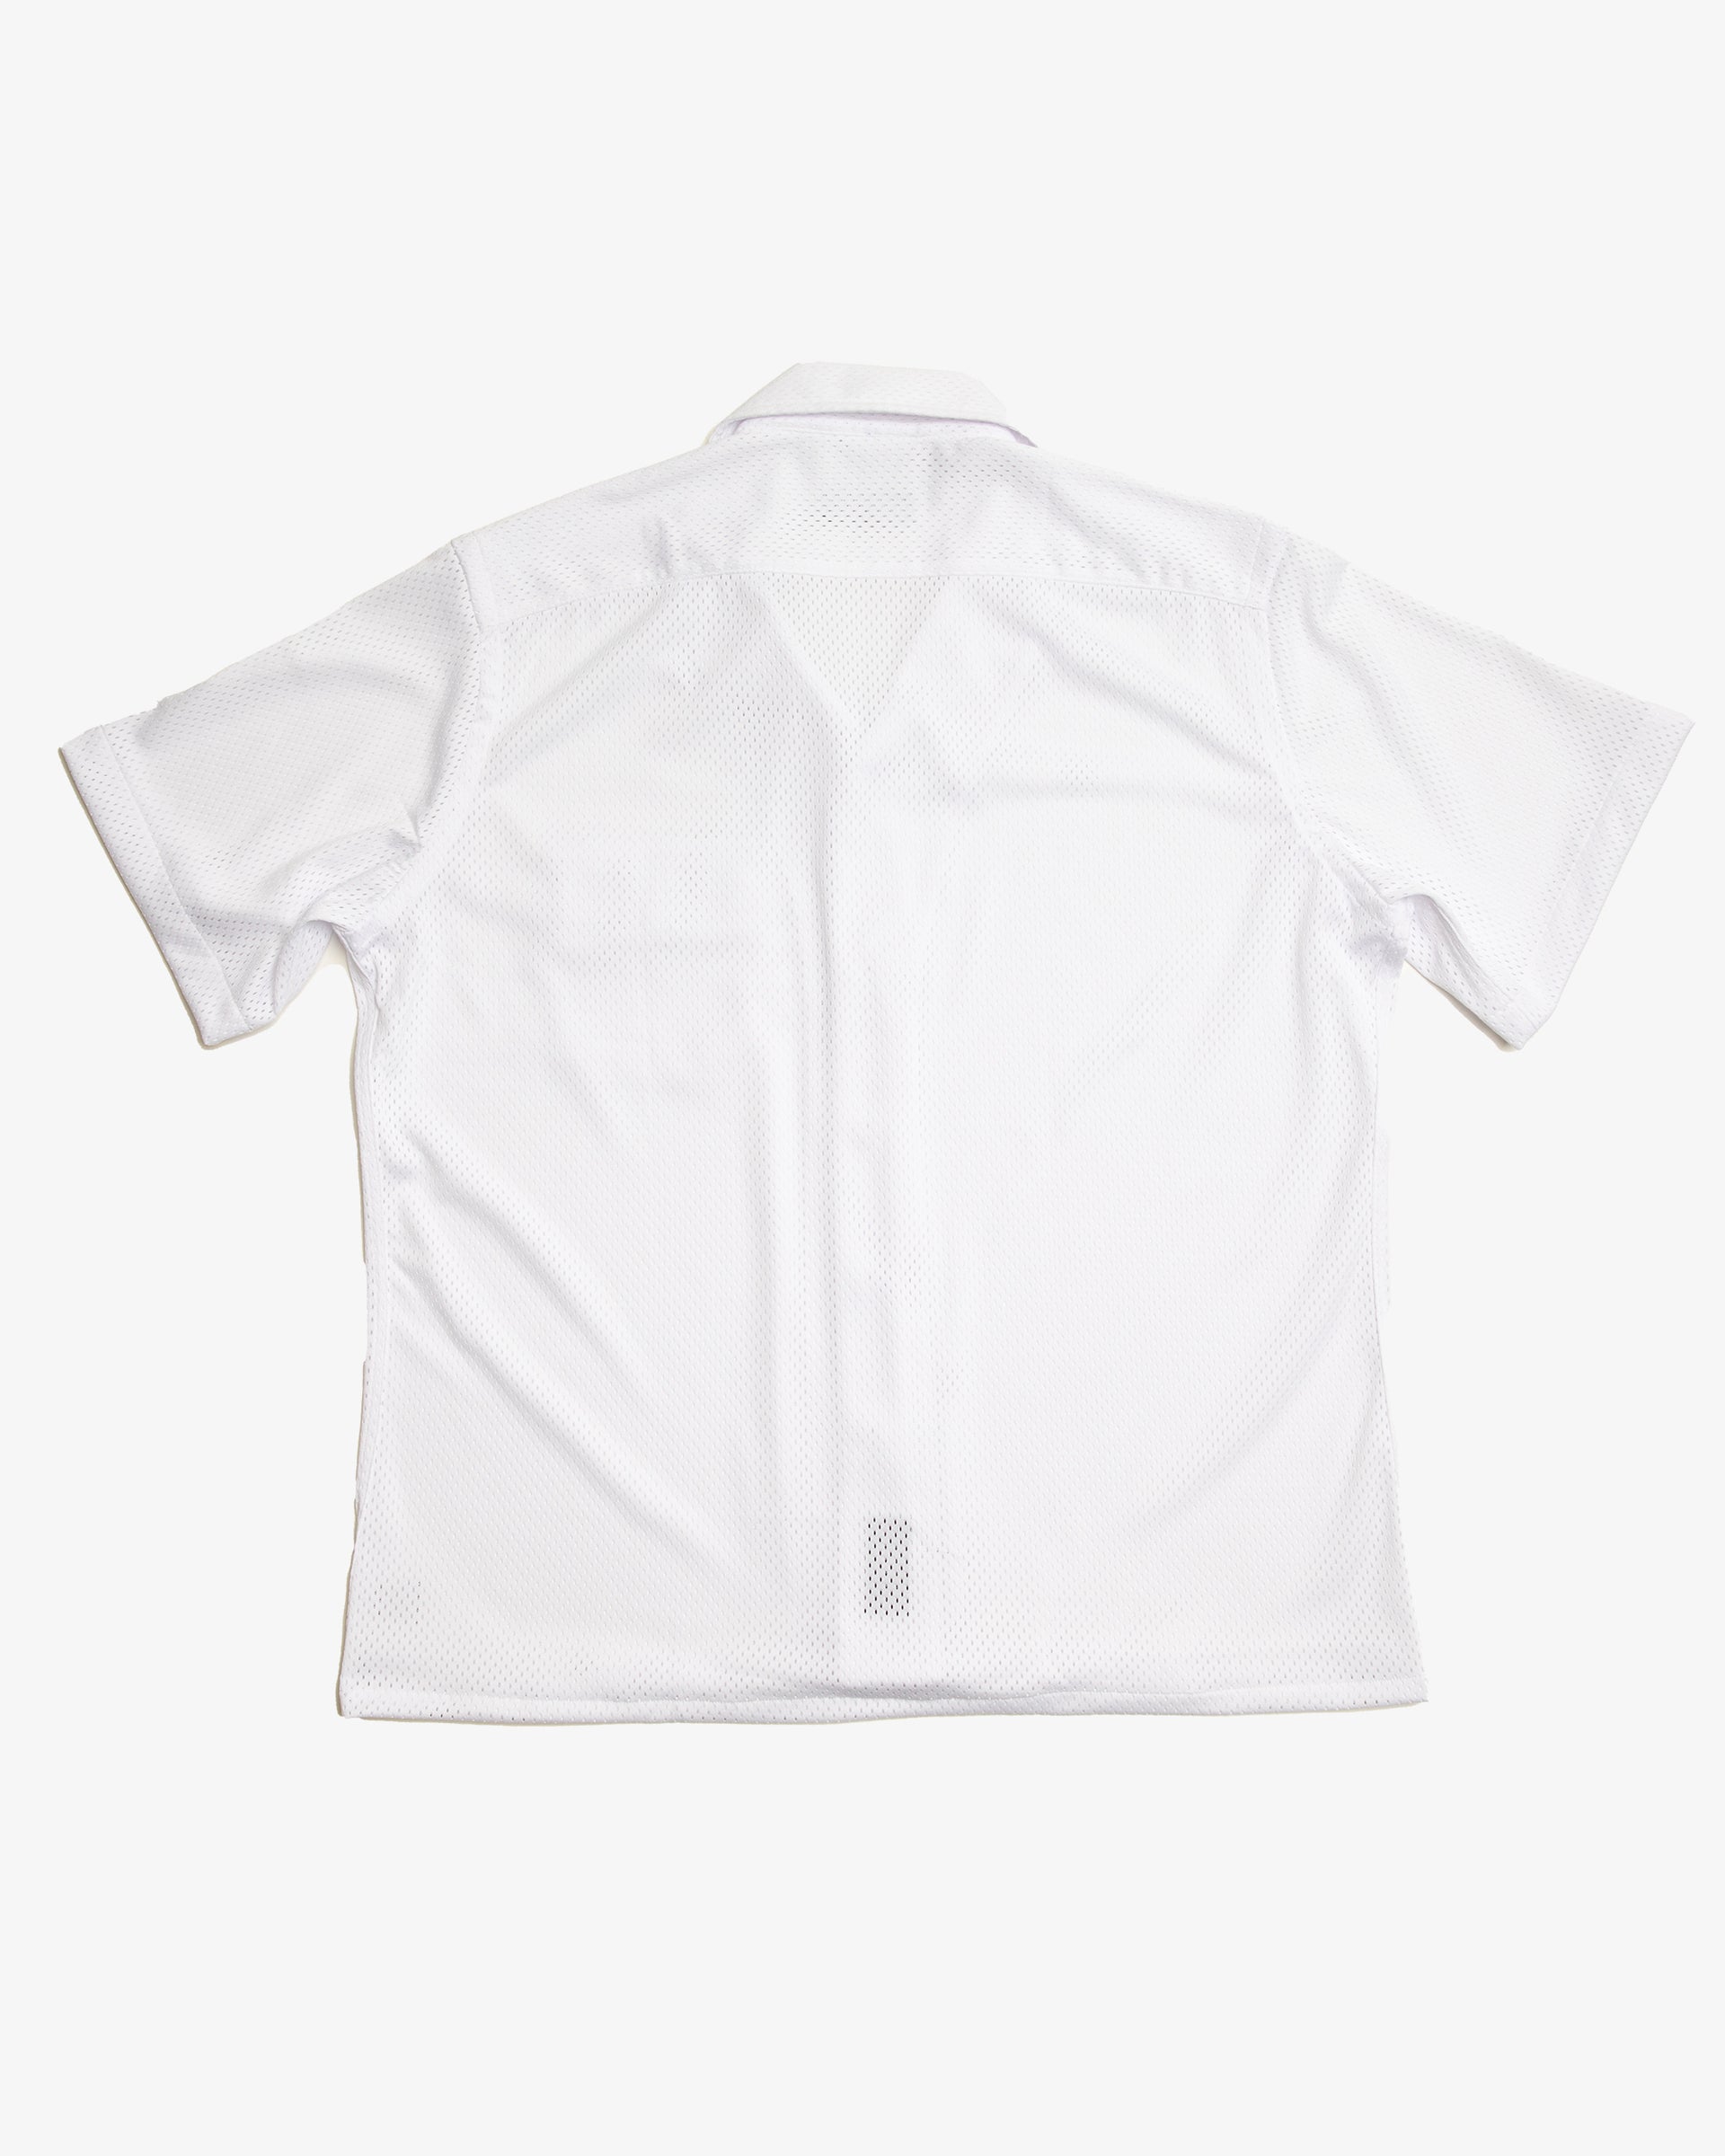 Mesh Camp Shirt - White